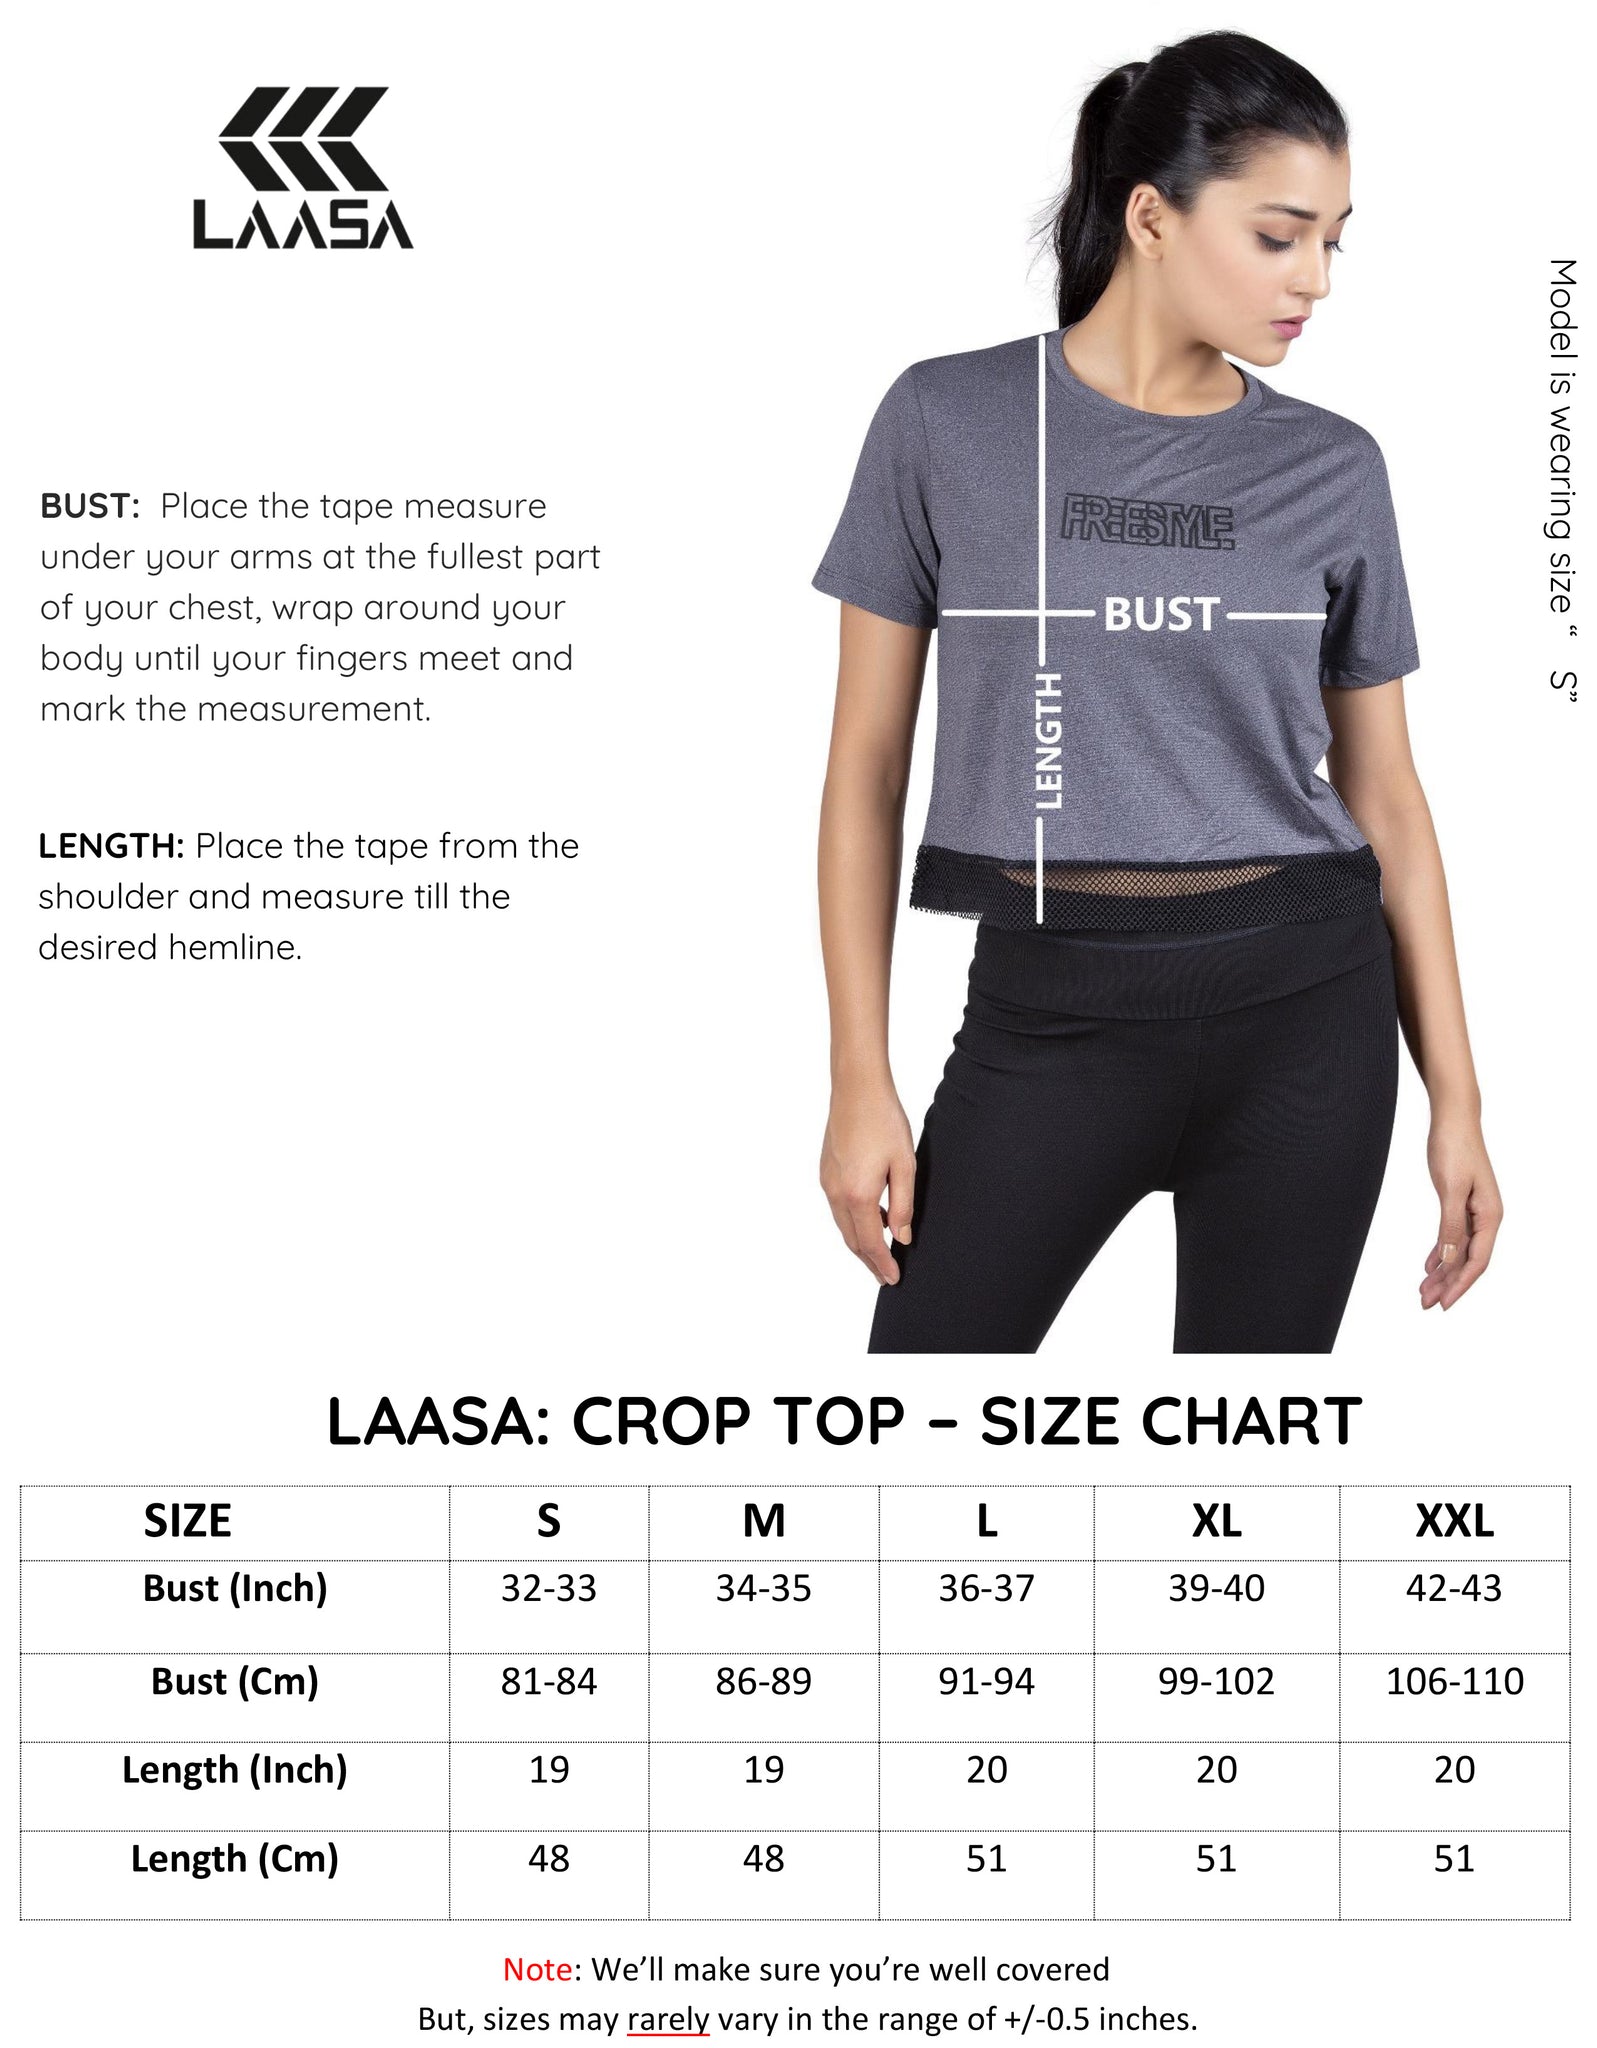 girls crop top size chart laasasports.com